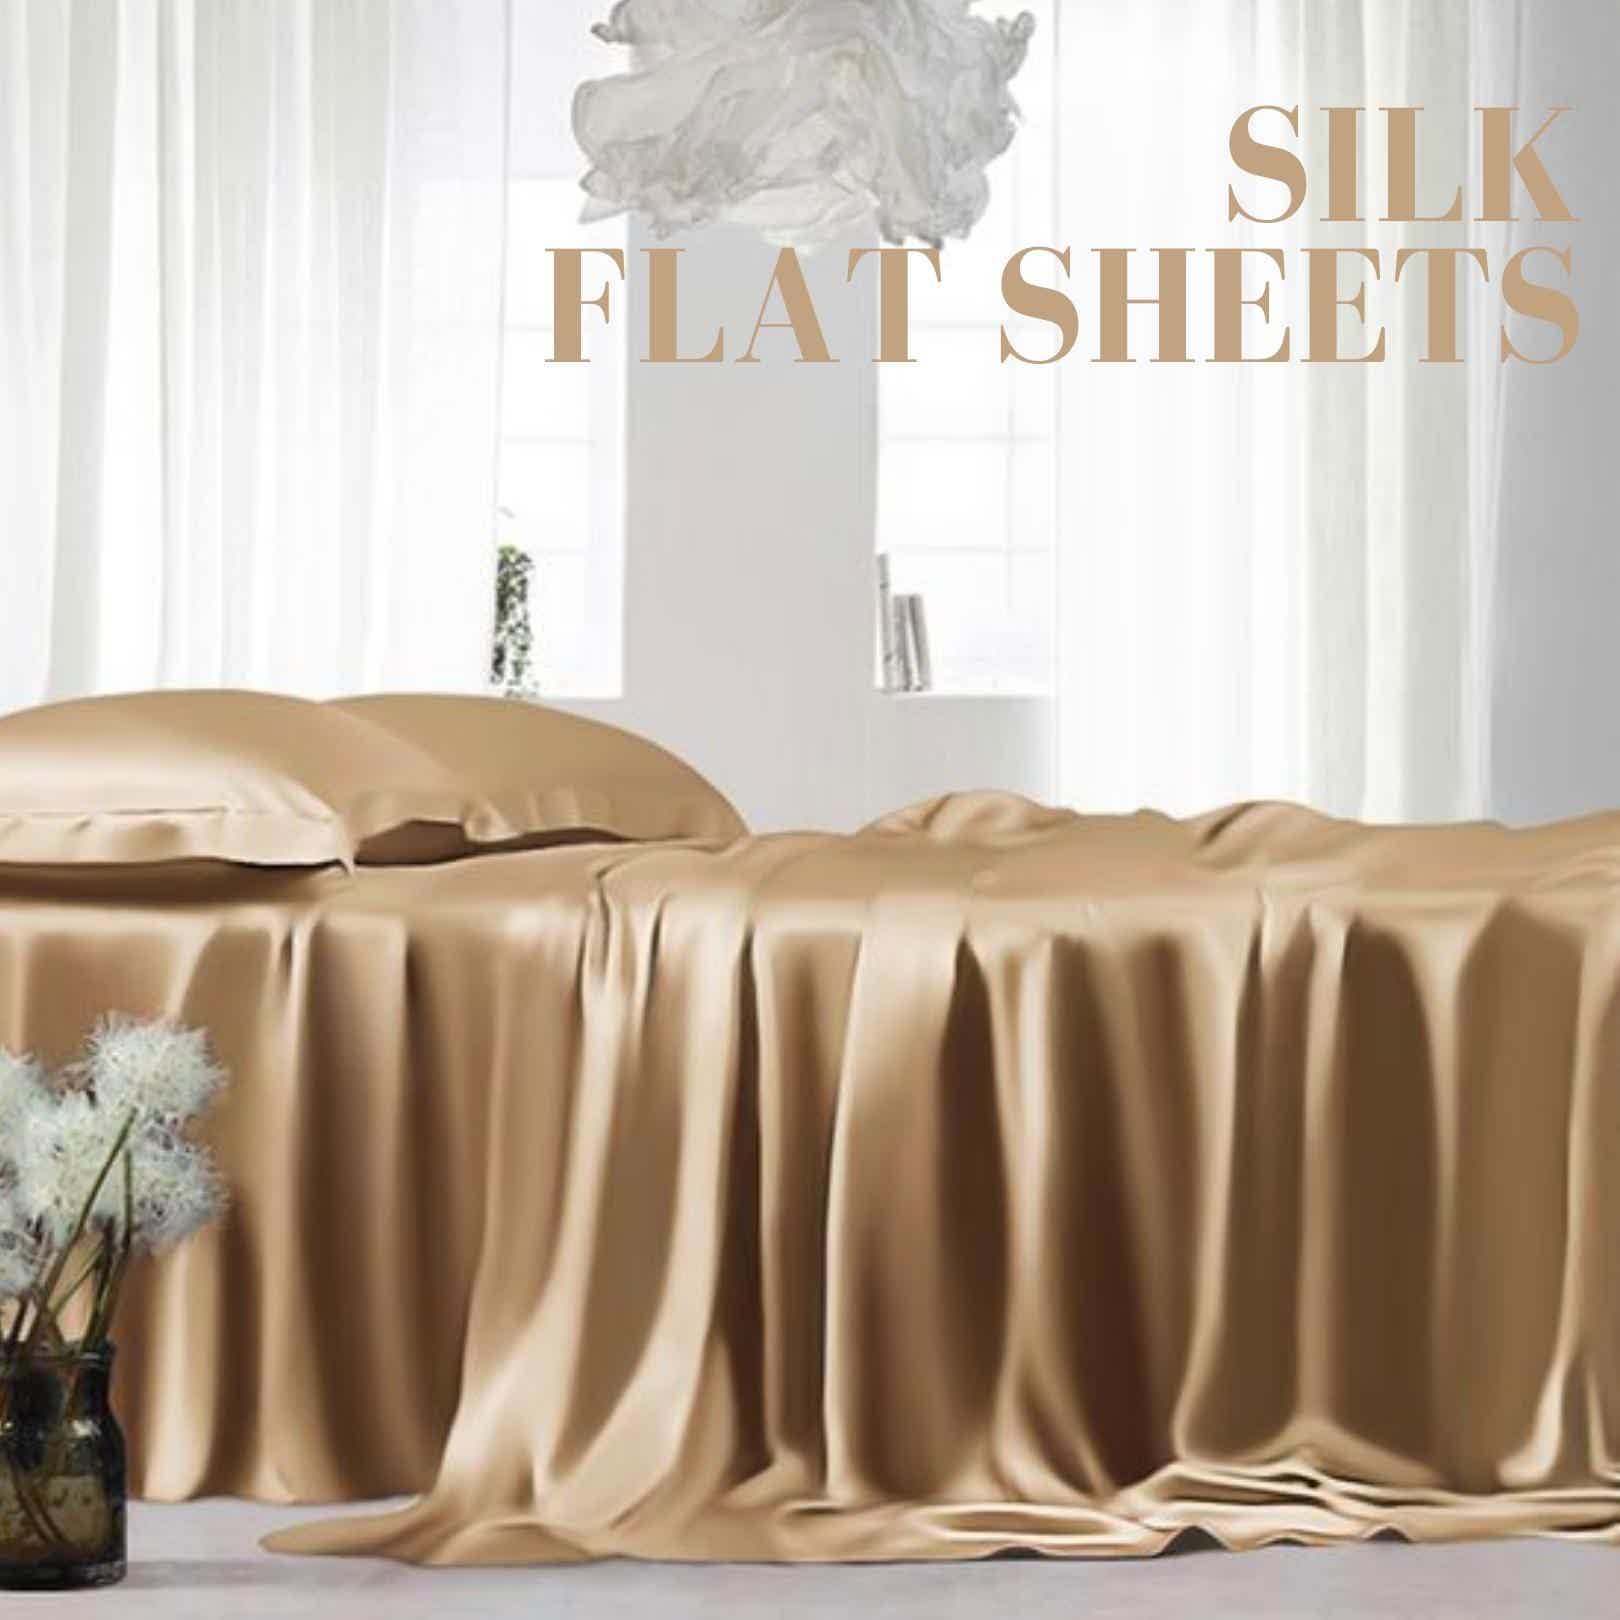 promeed silk sheets set